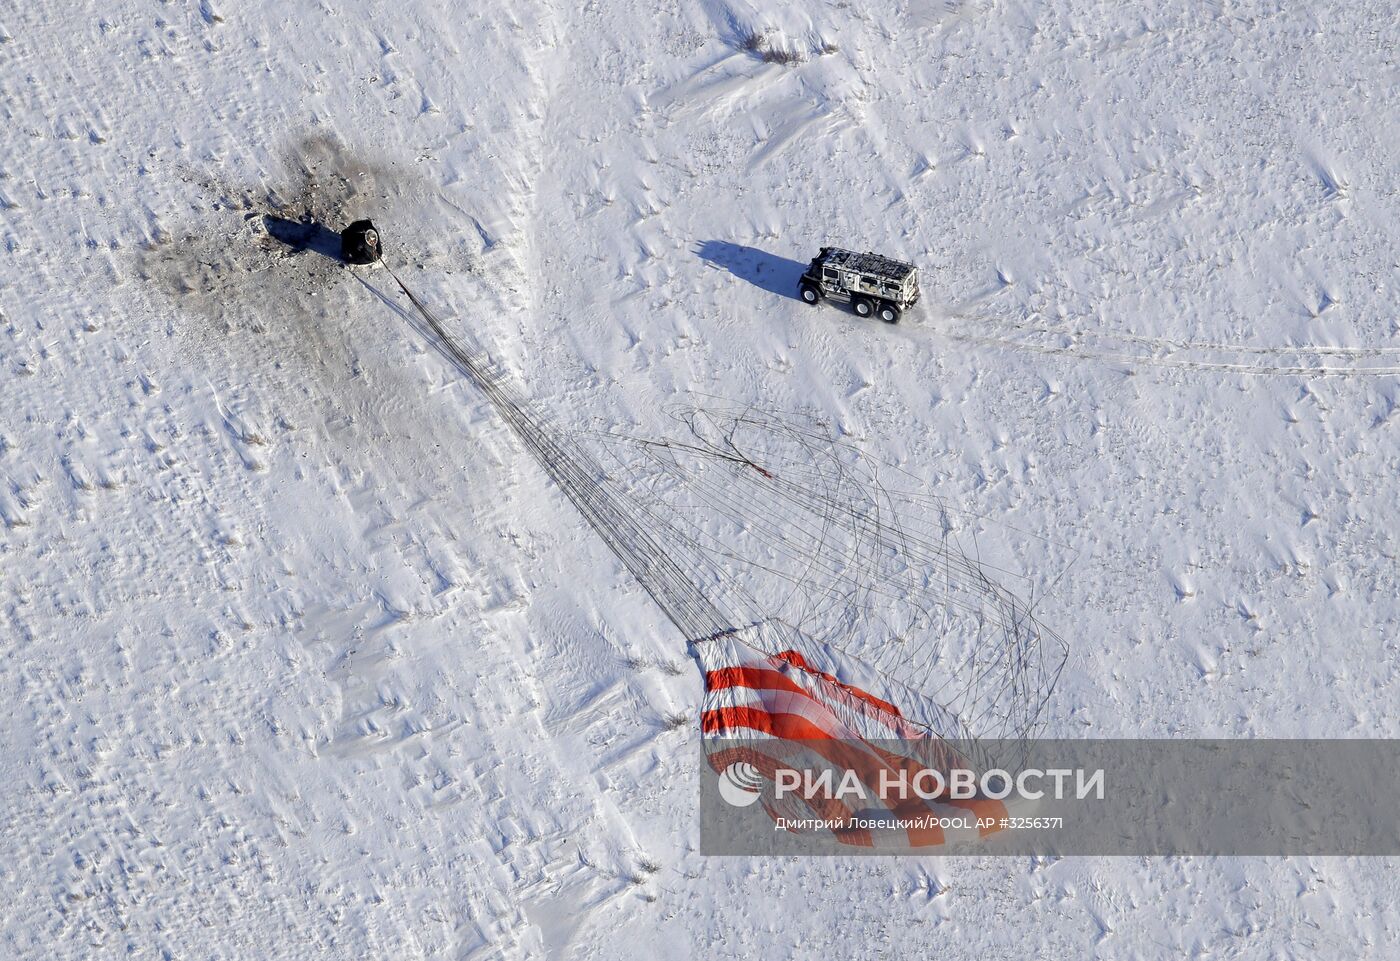 Посадка спускаемого аппарата ТПК "Союз МС-05"